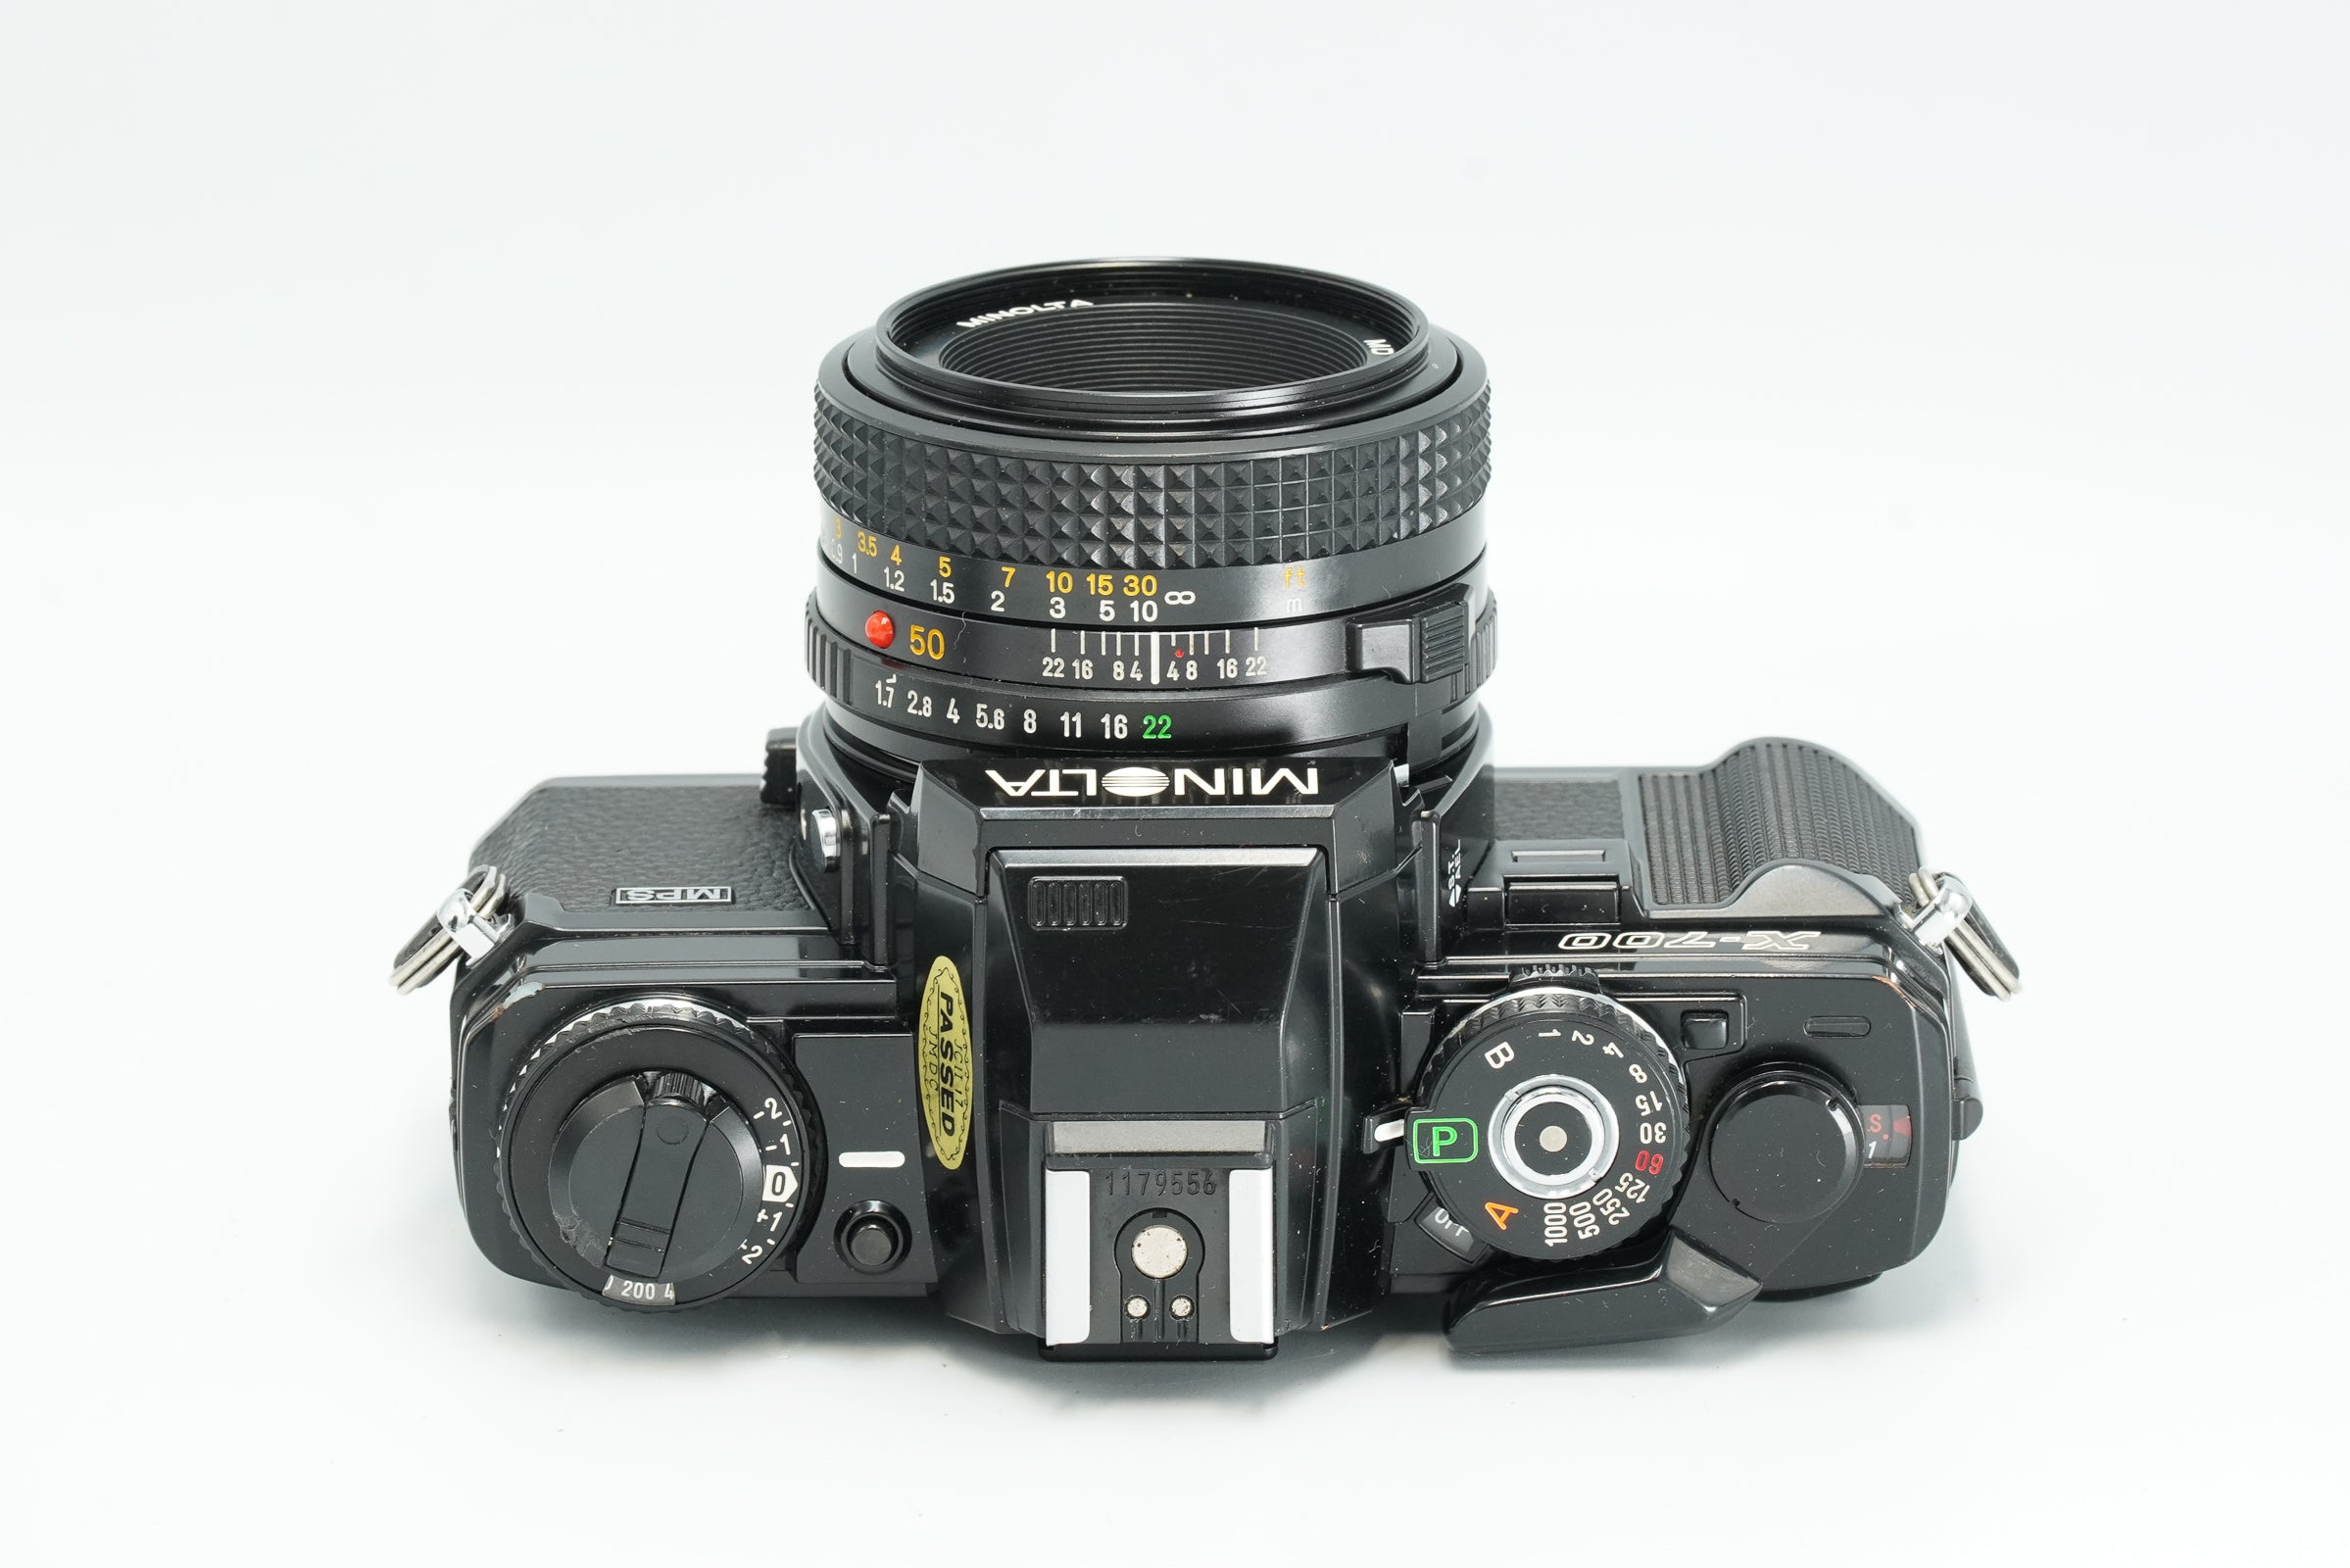 Minolta X700 black COMBO with two lenses